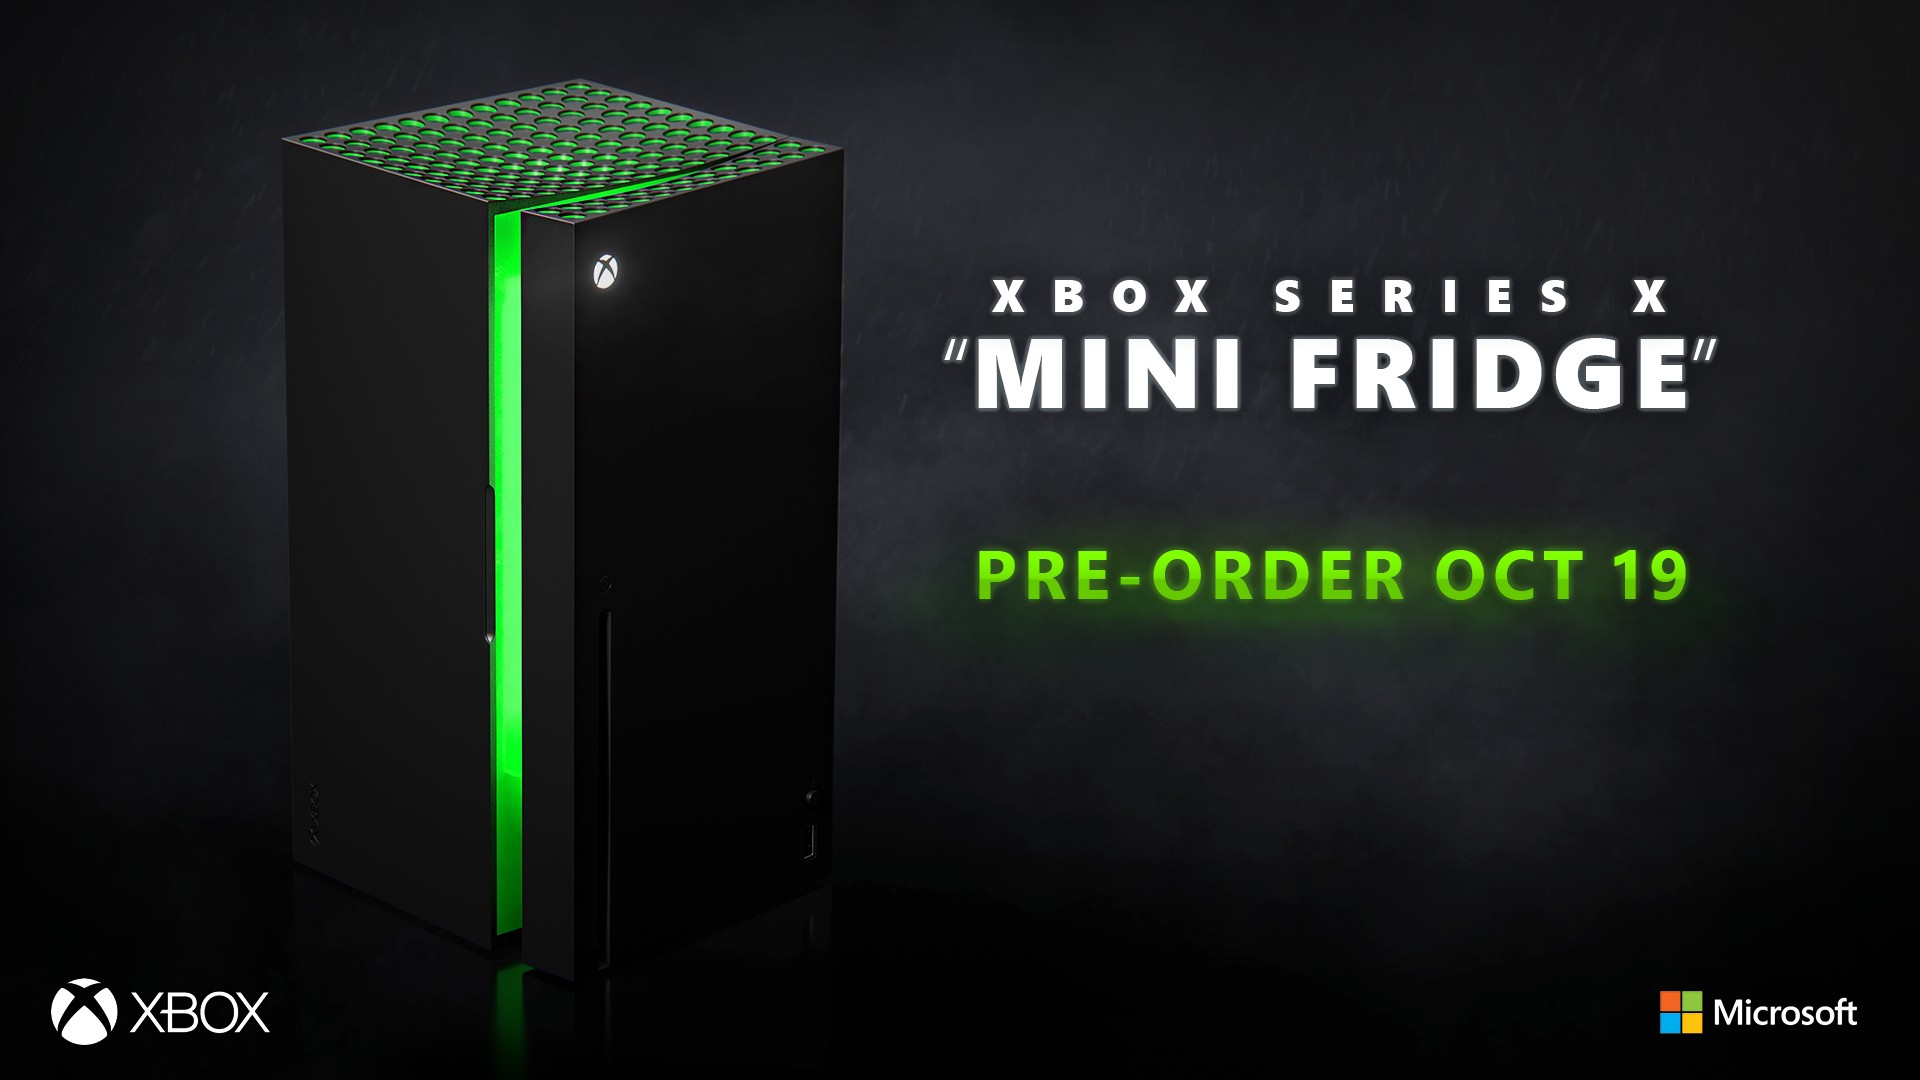 Xbox Series X "Mini Fridge" Hero Image